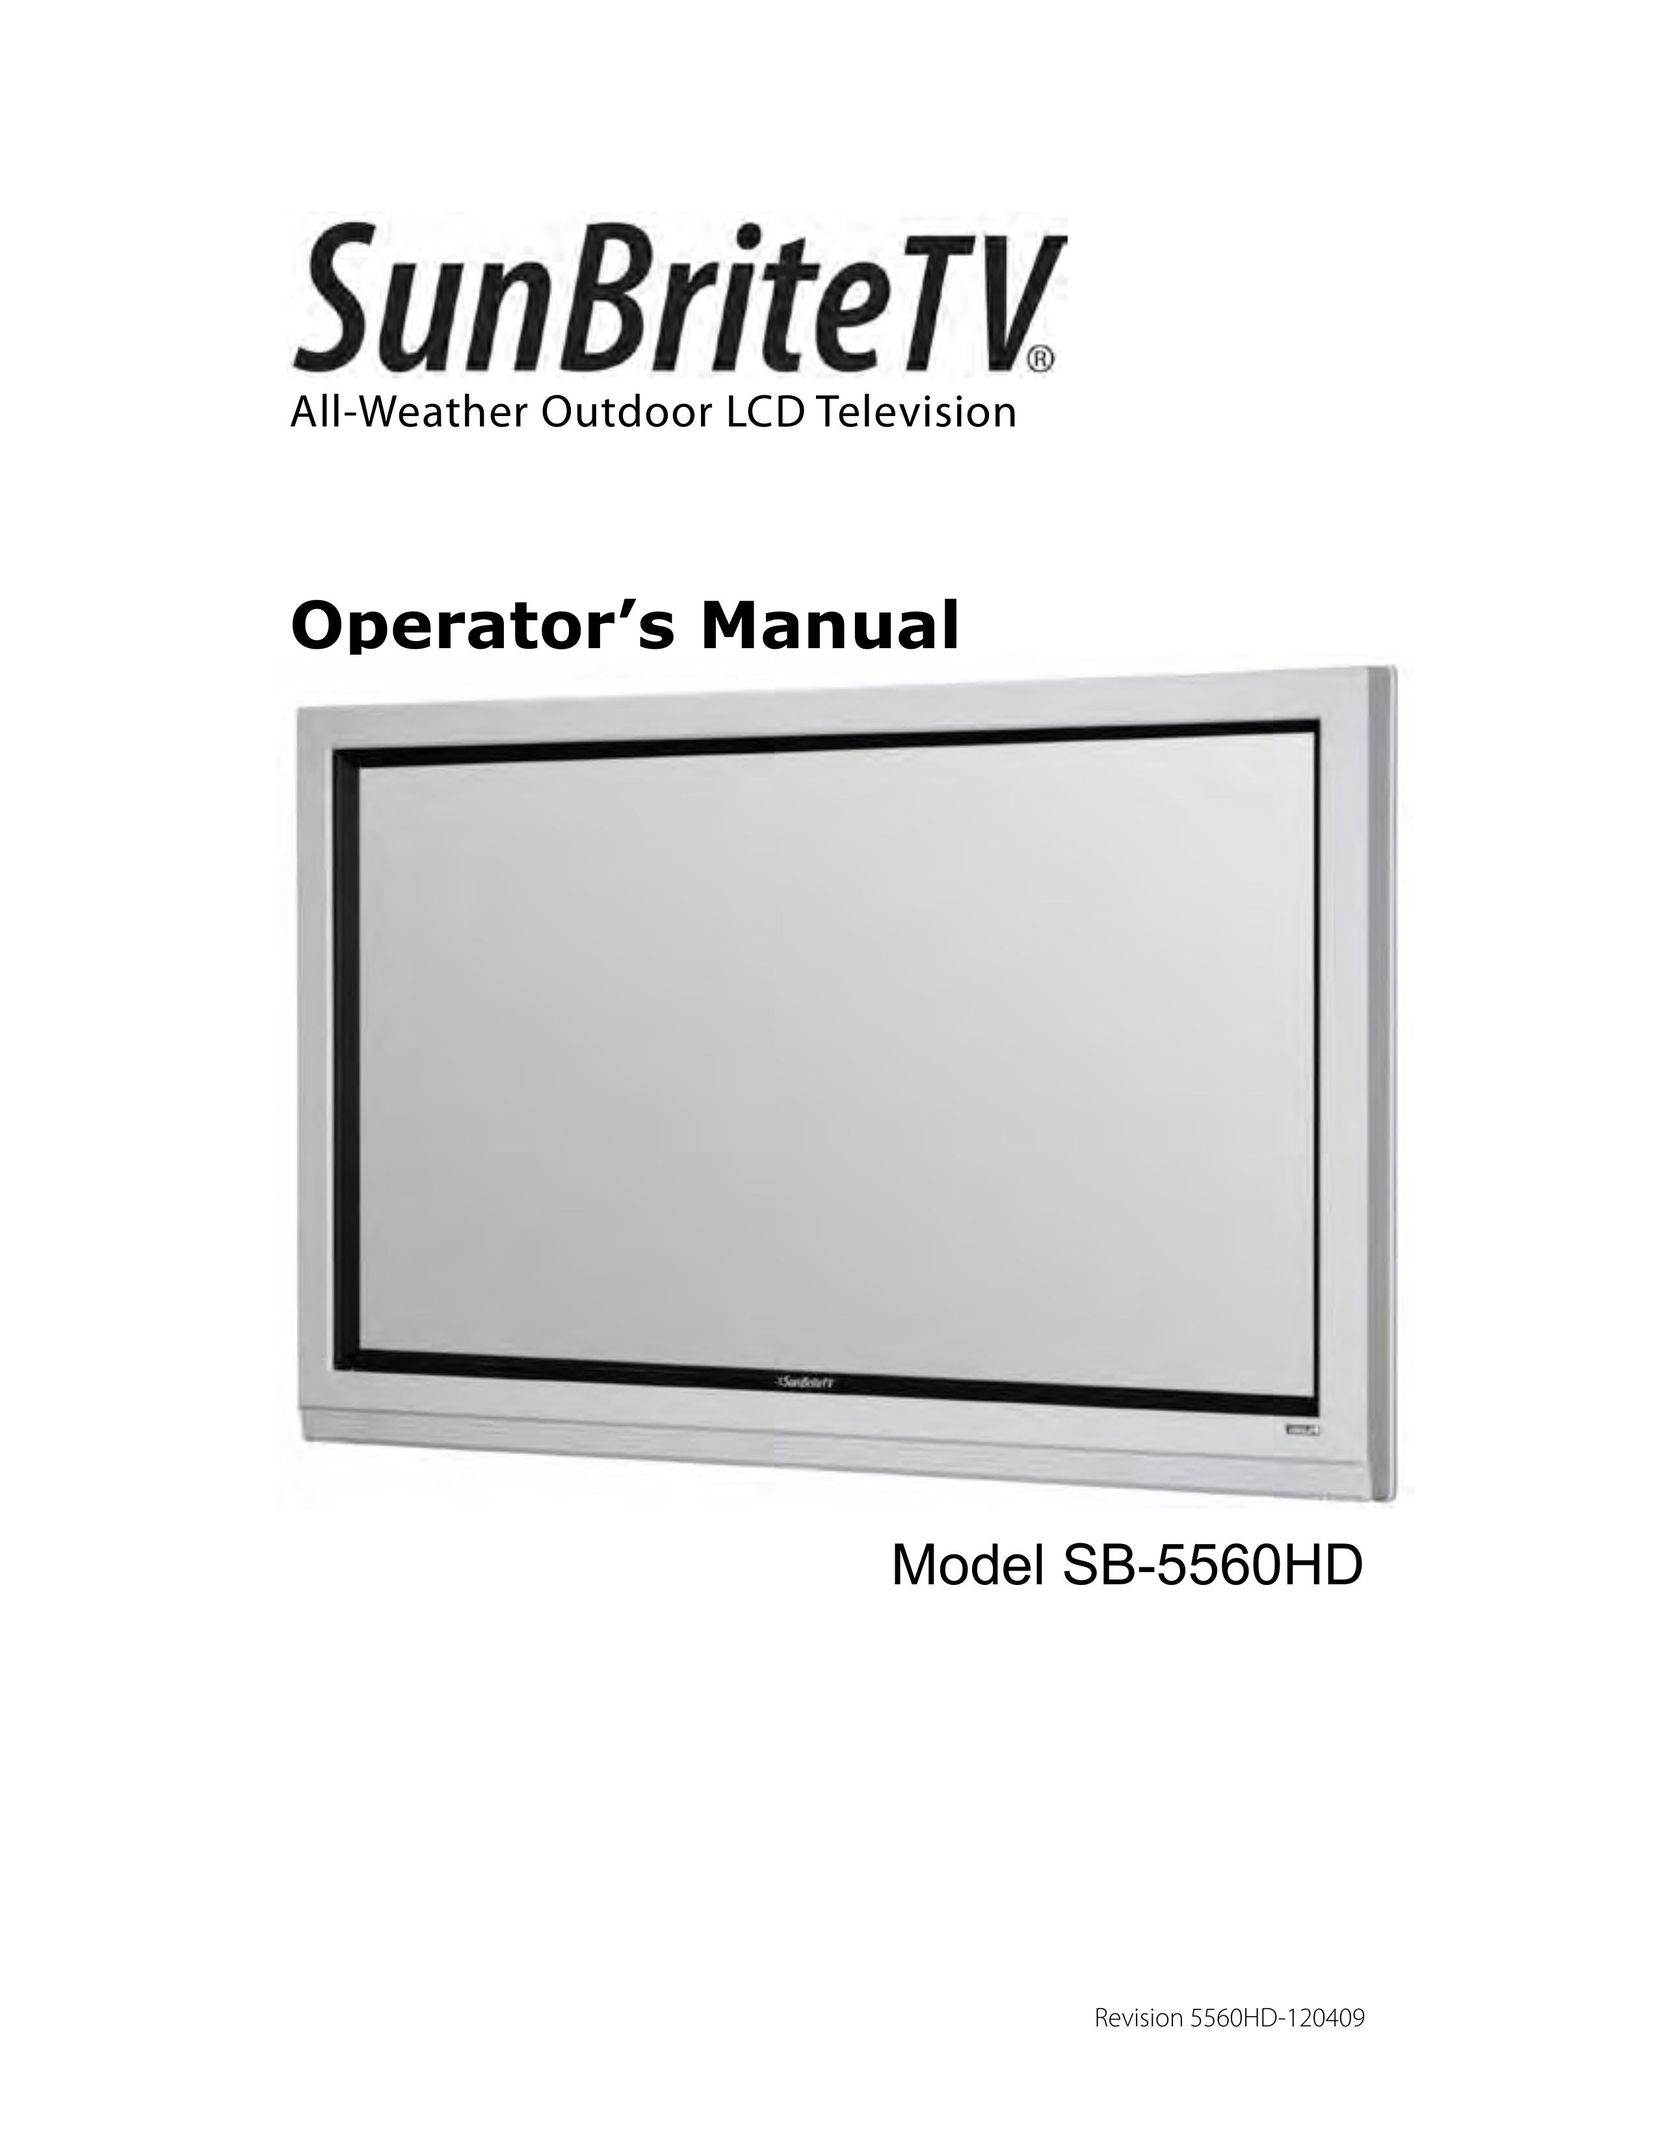 SunBriteTV SB-5560HD Flat Panel Television User Manual